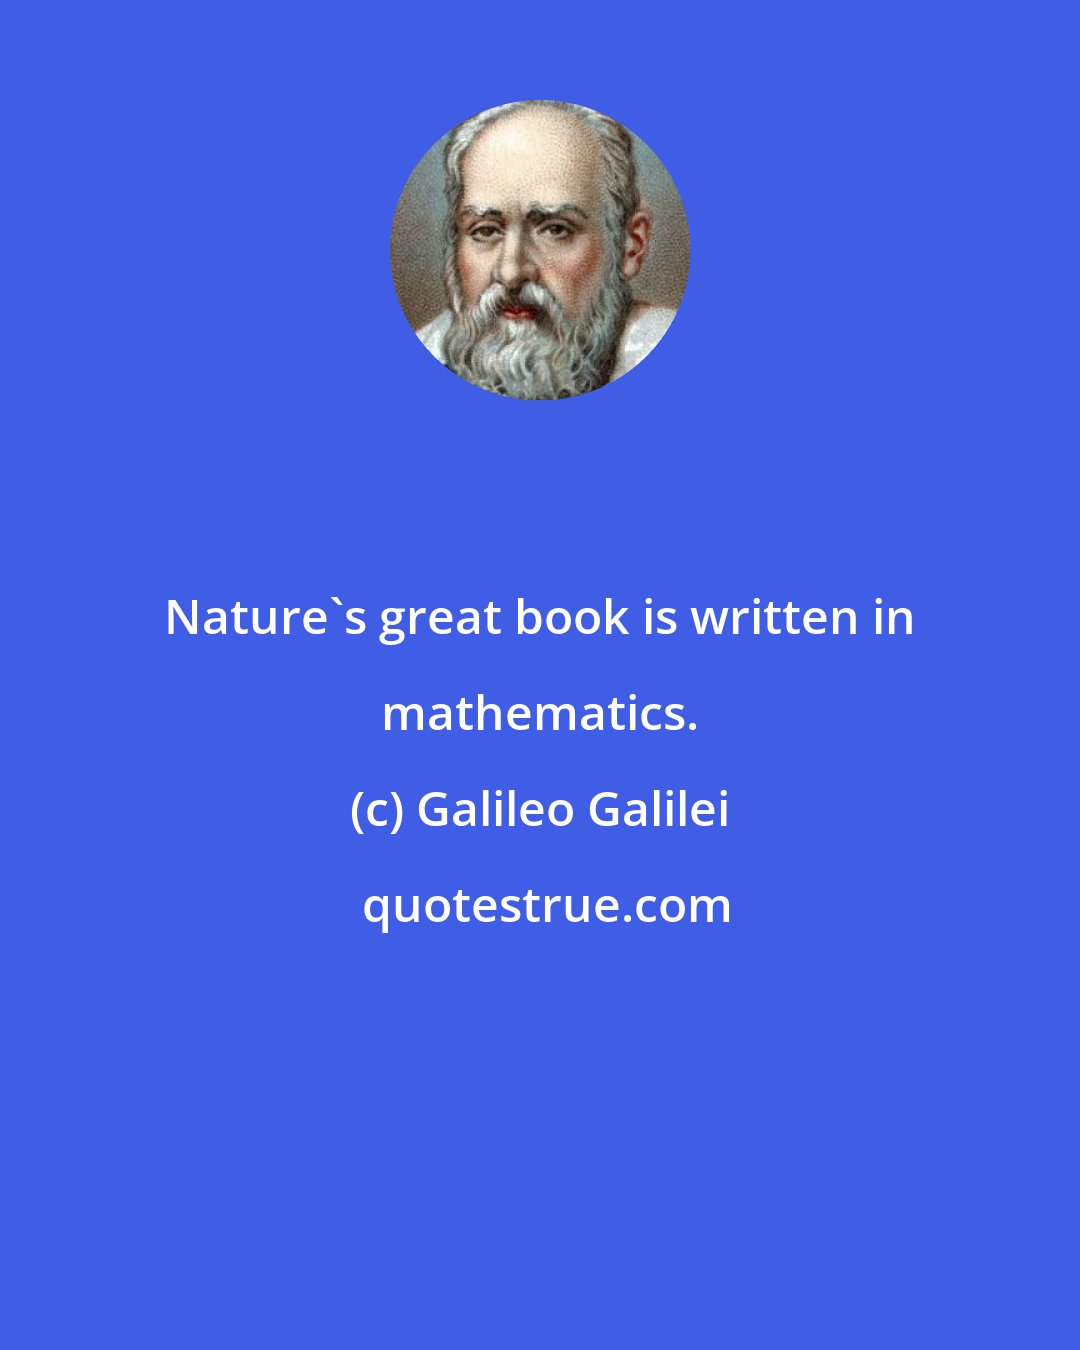 Galileo Galilei: Nature's great book is written in mathematics.